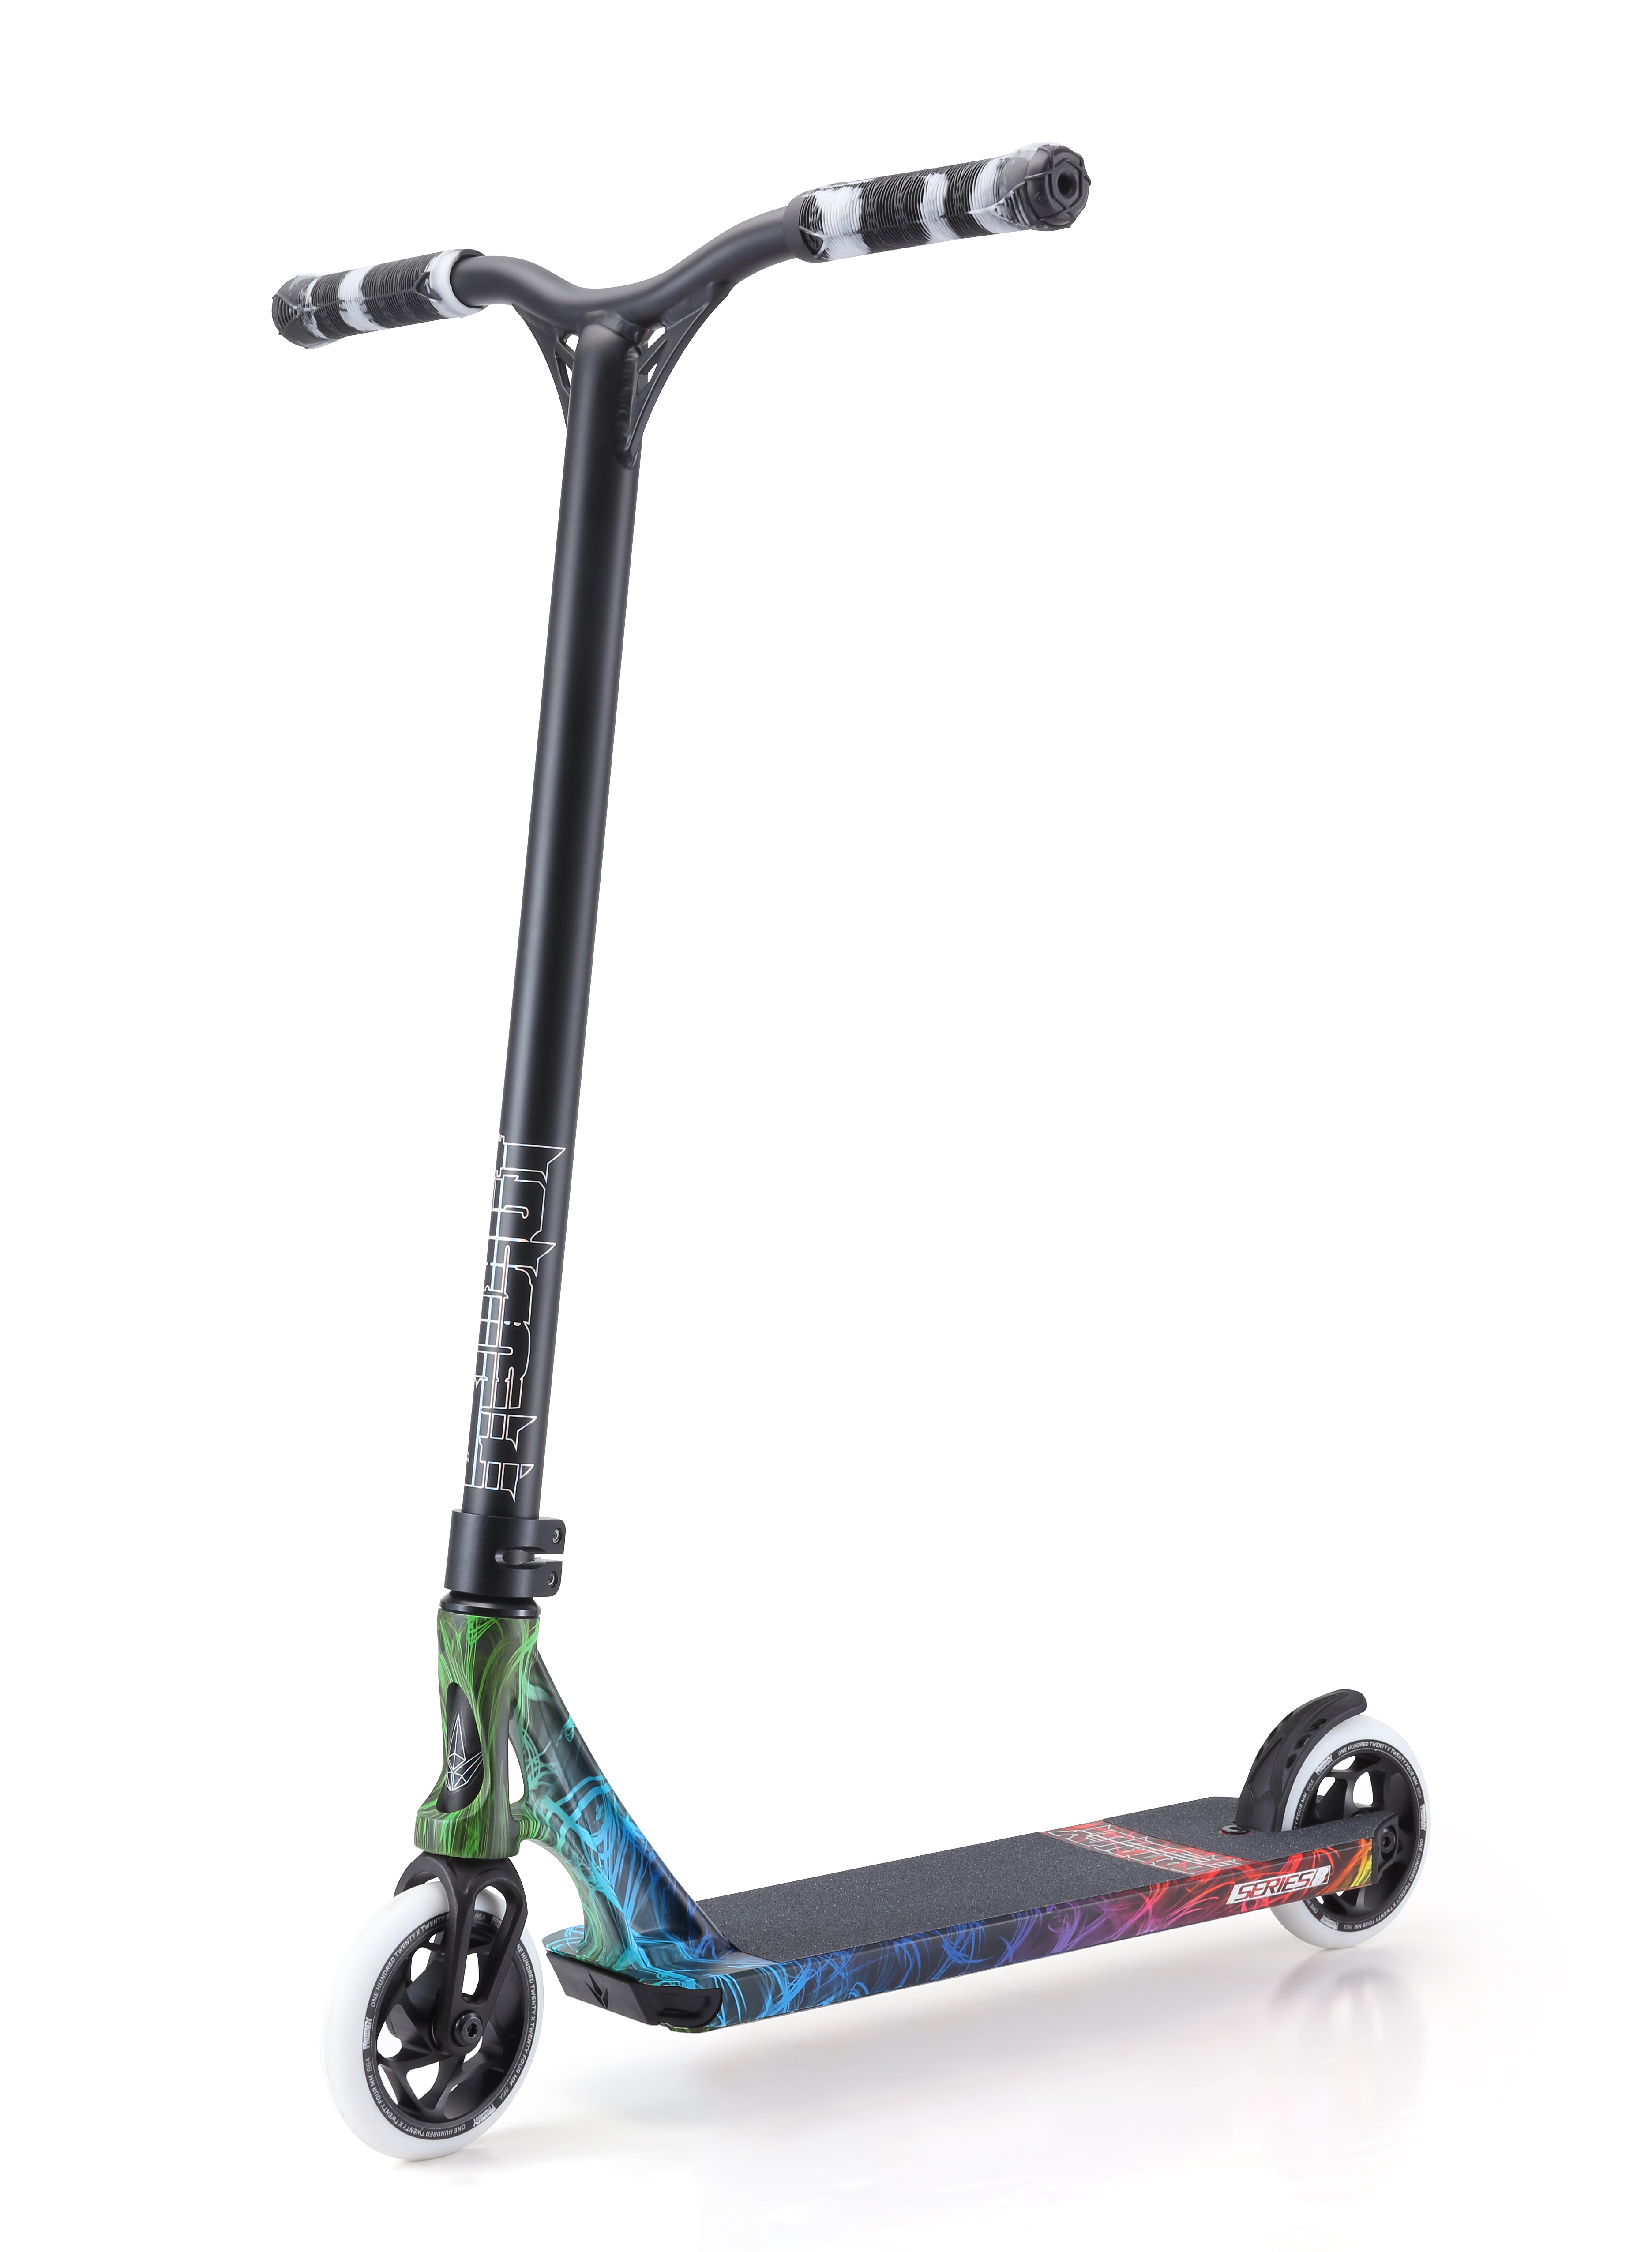 Envy Prodigy S8 Trick Scooter 2021 - Board Shoppe